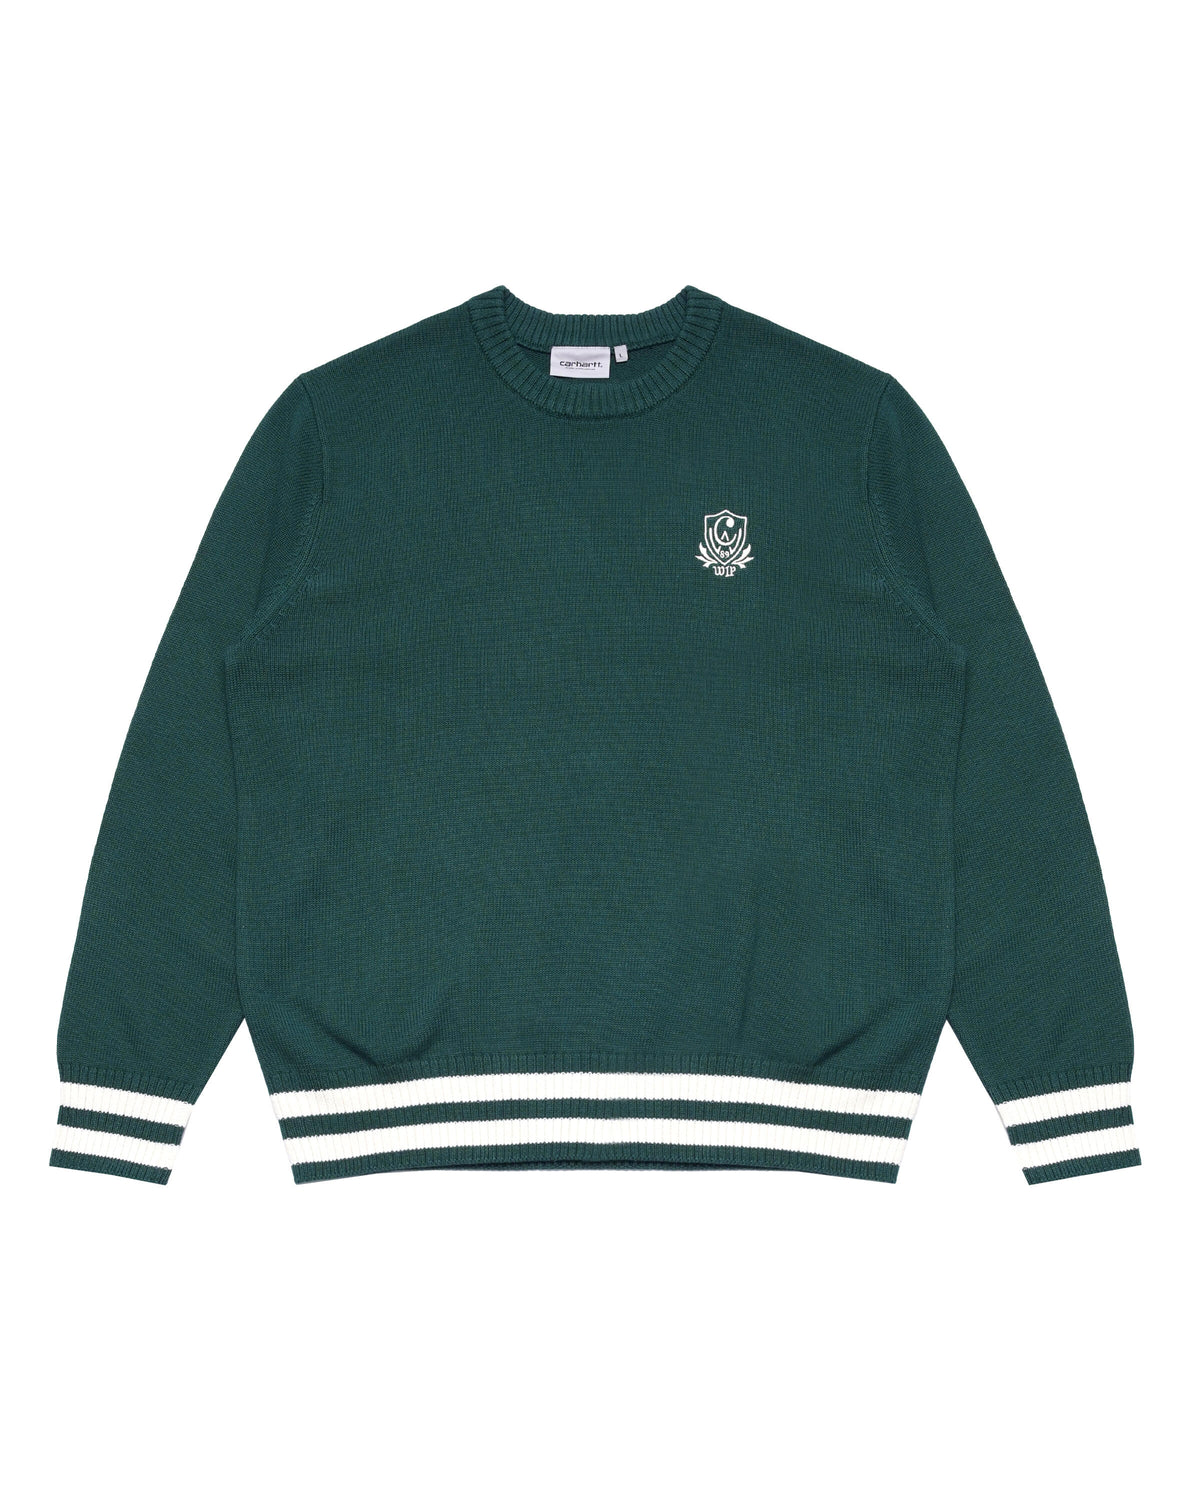 Carhartt WIP Cambridge Sweater